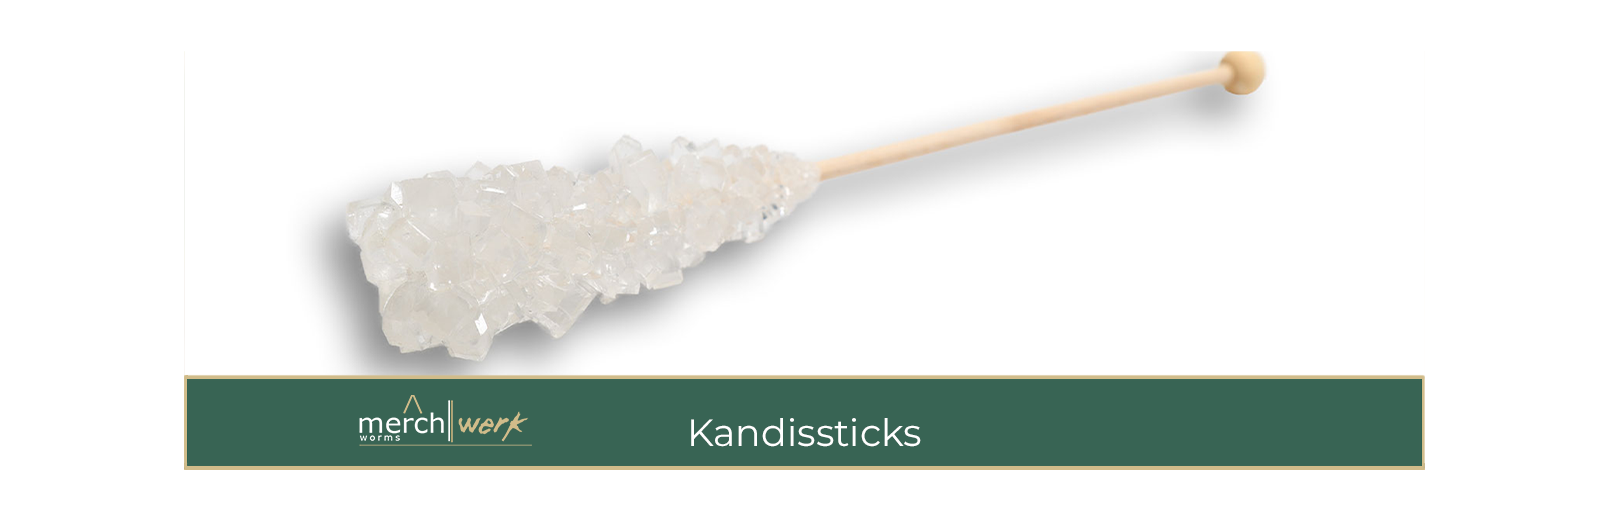 Kandissticks